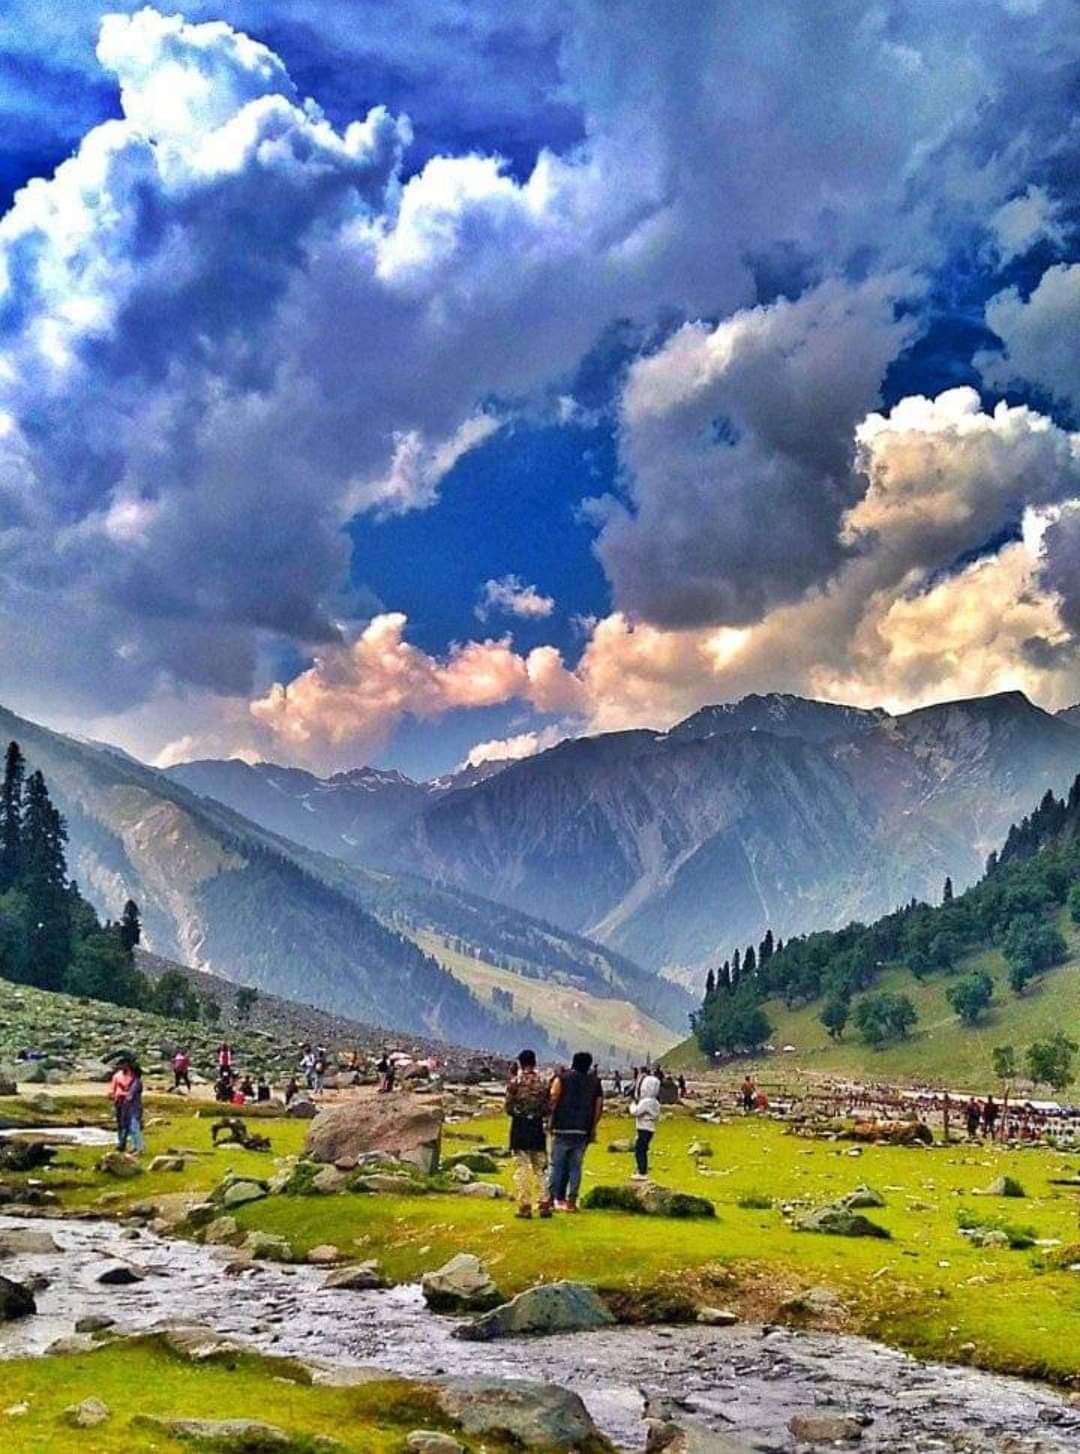 MAGICAL KASHMIR ECONOMY - Countryside Kashmir